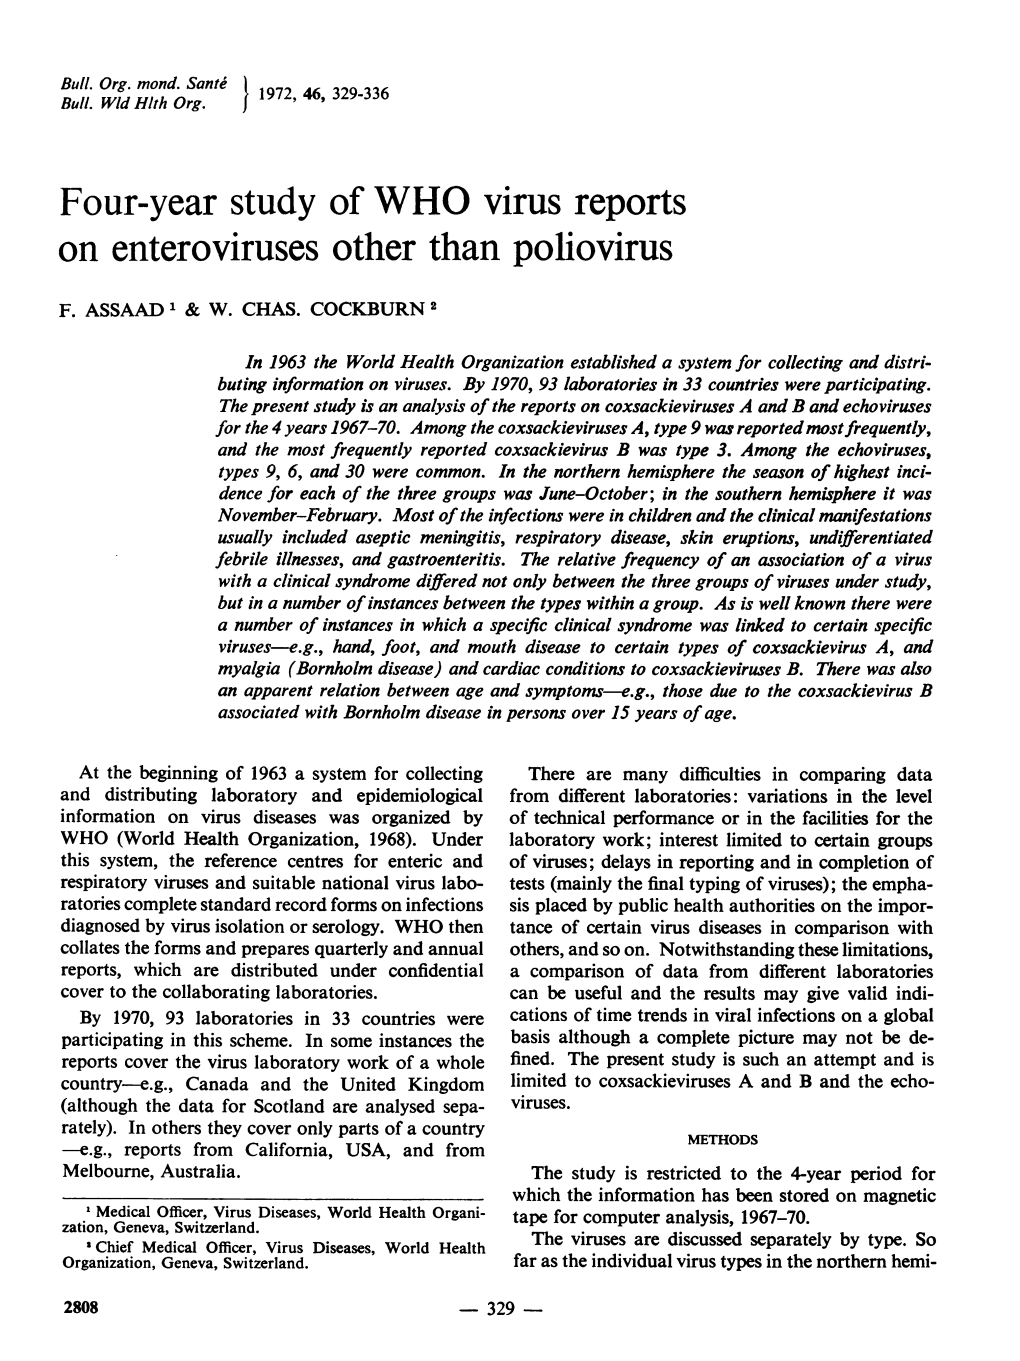 Four-Year Study of WHO Virus Reports on Enteroviruses Other Than Poliovirus